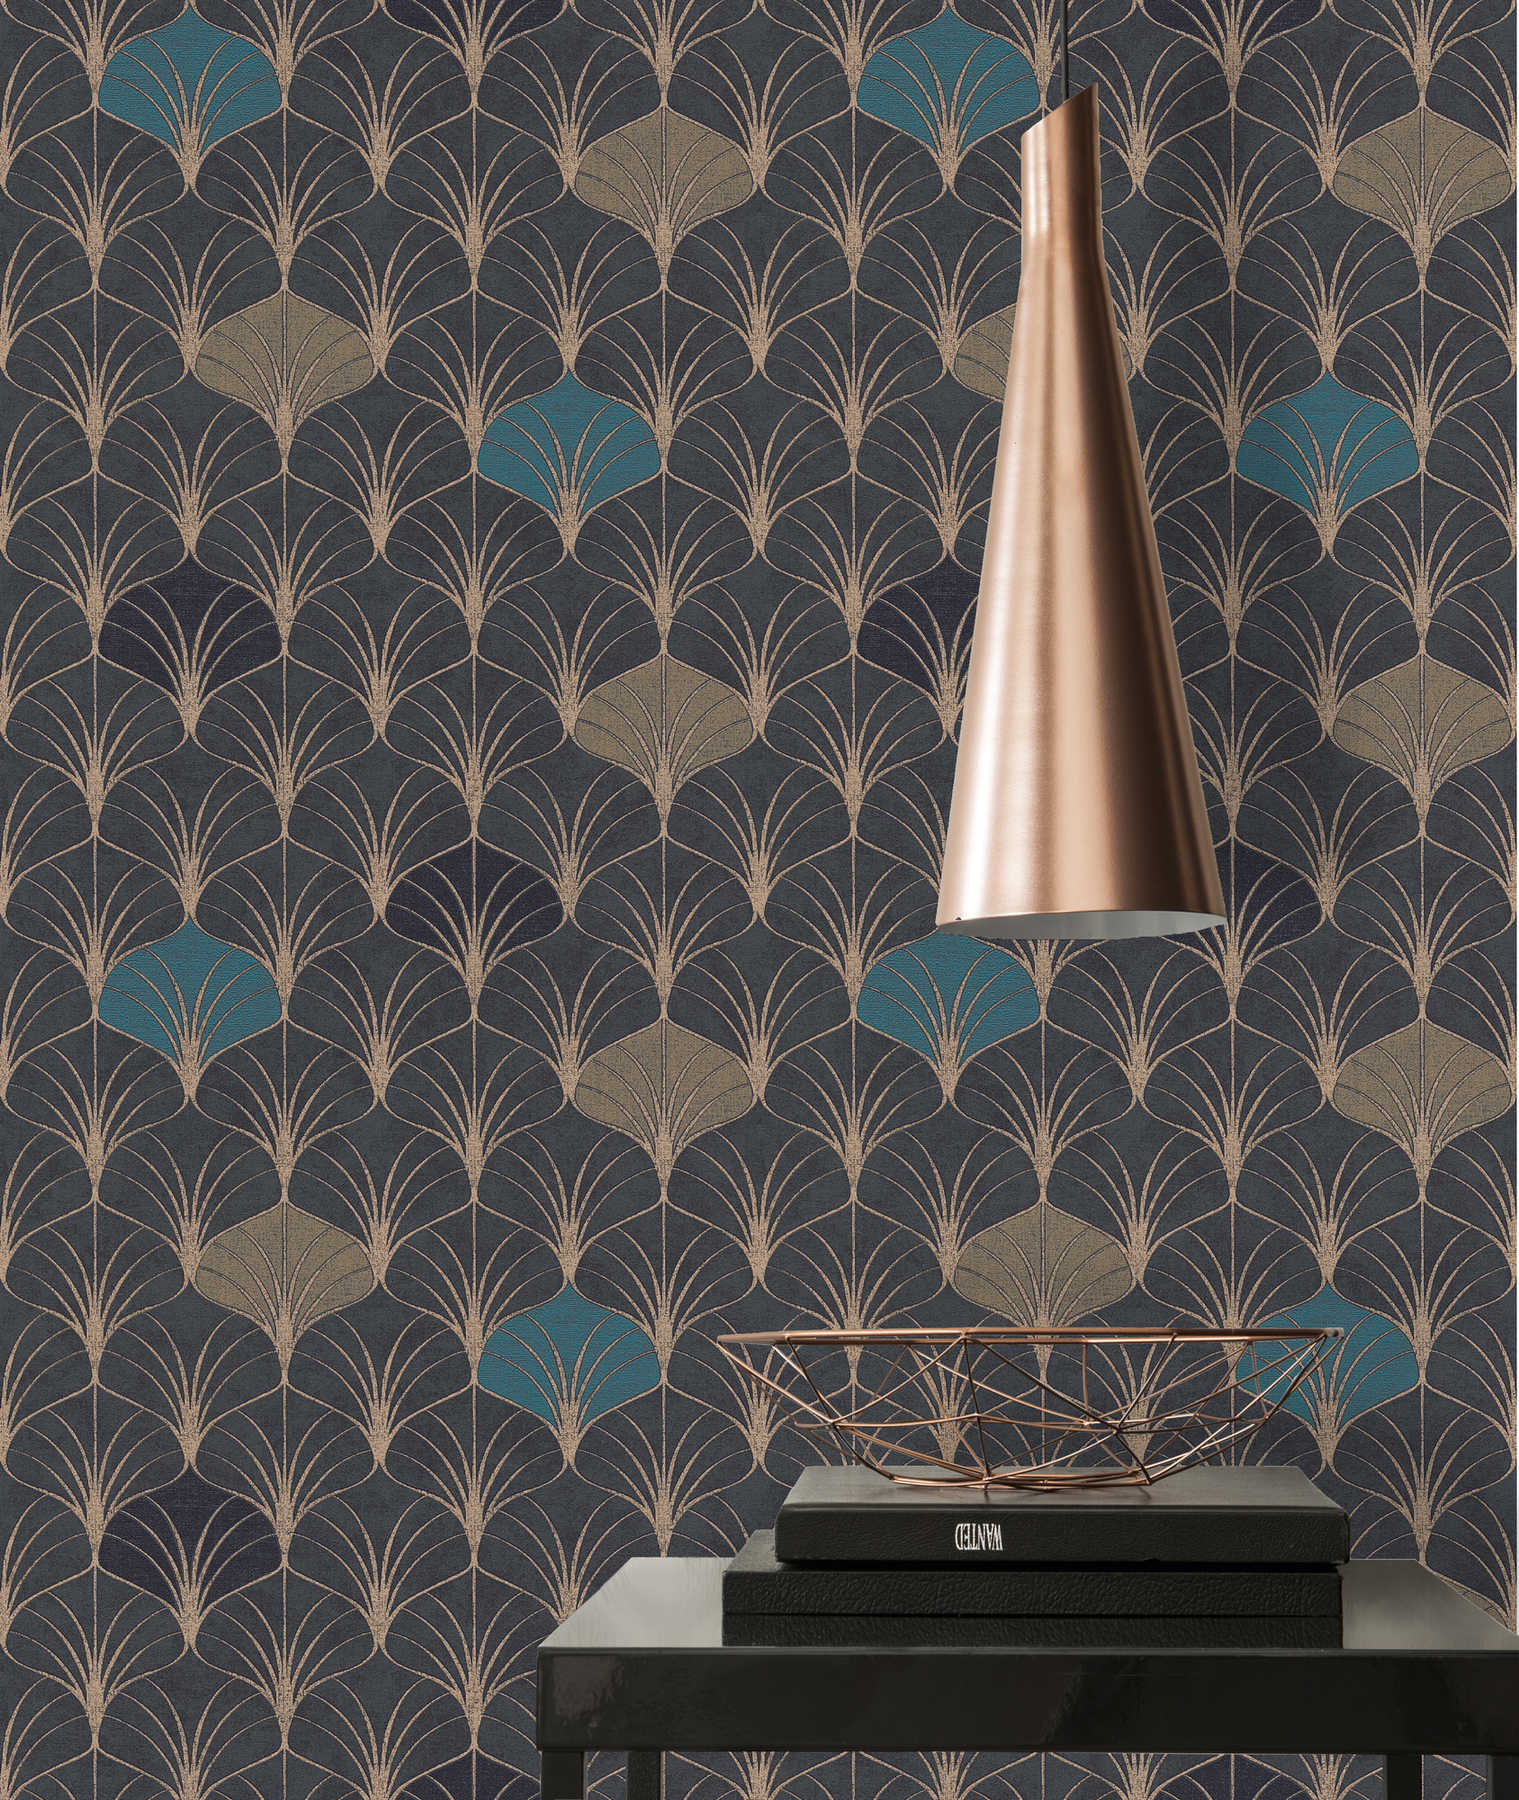             Pattern wallpaper art deco style with metallic effect - gold, black, blue
        